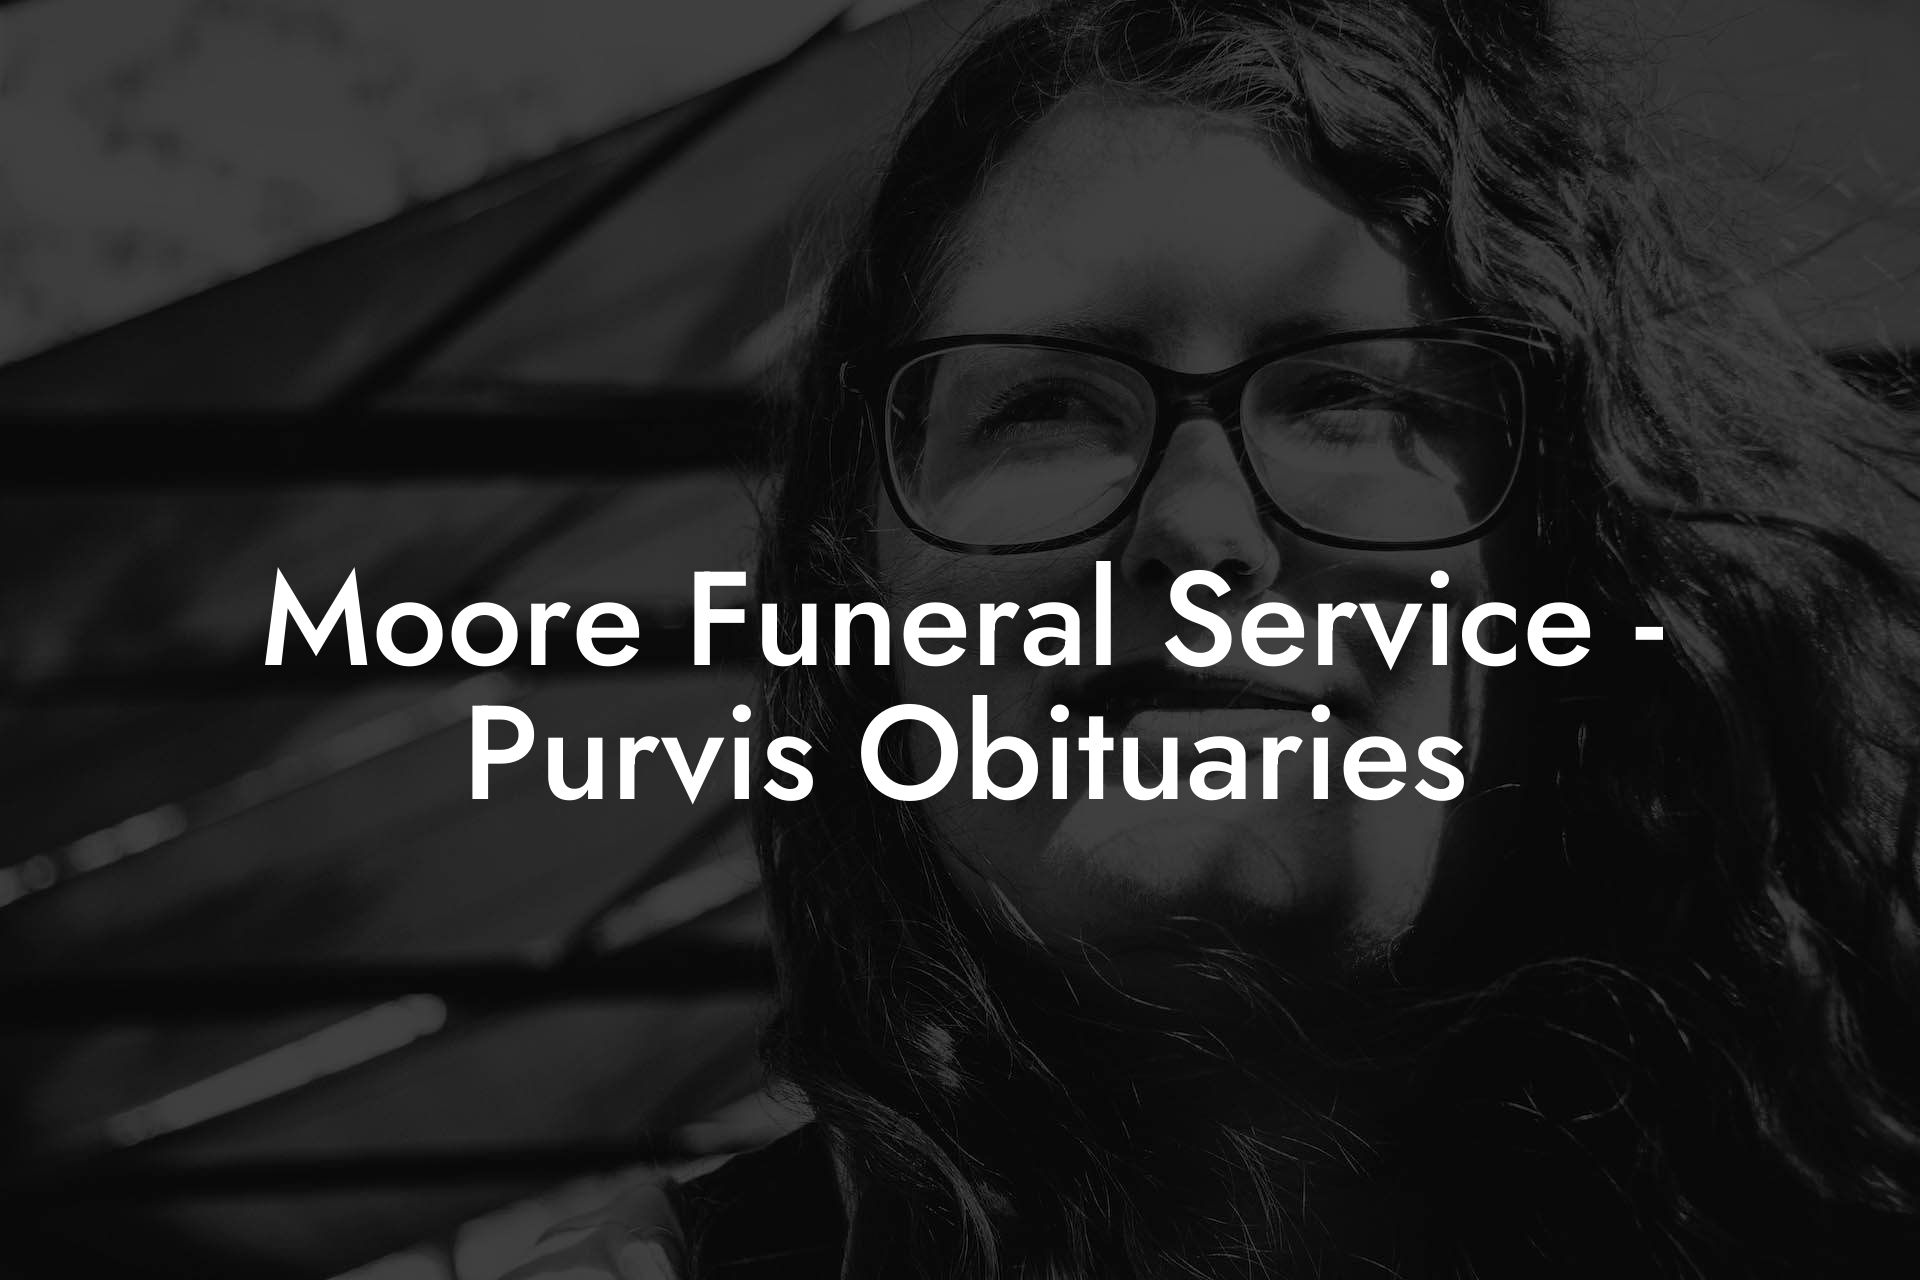 Moore Funeral Service - Purvis Obituaries